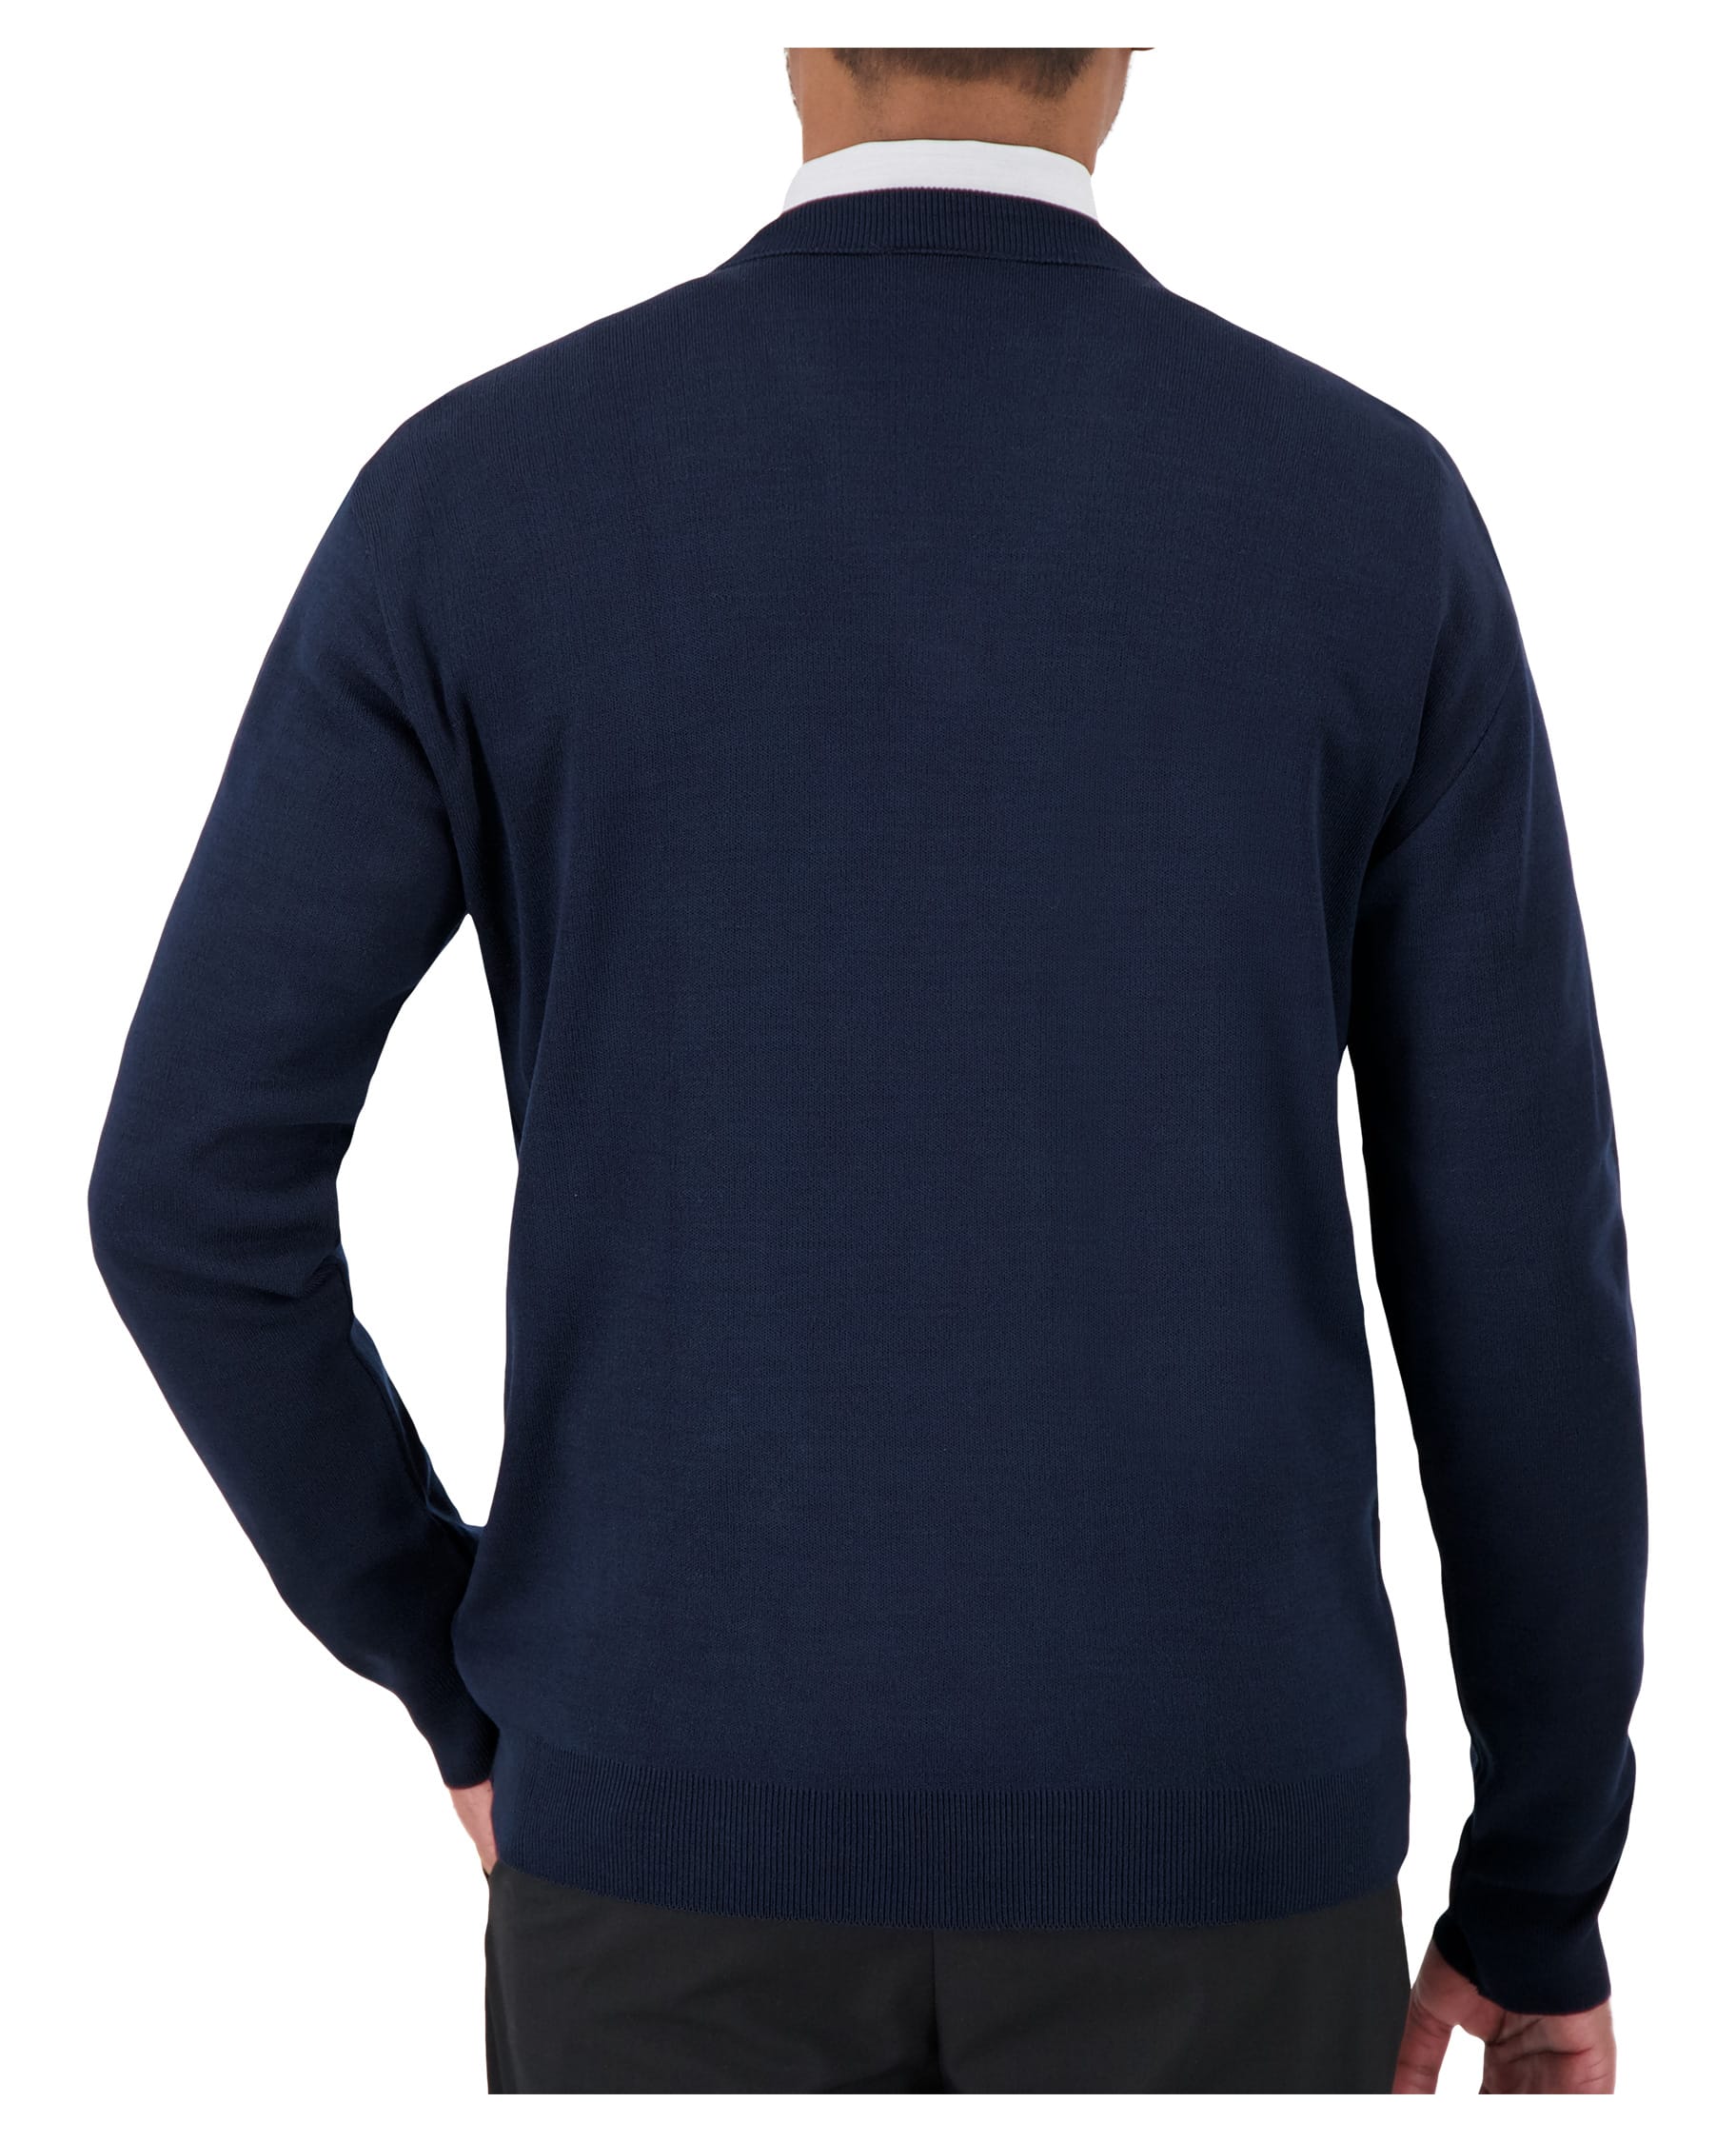 back of navy v-neck corporate sweater